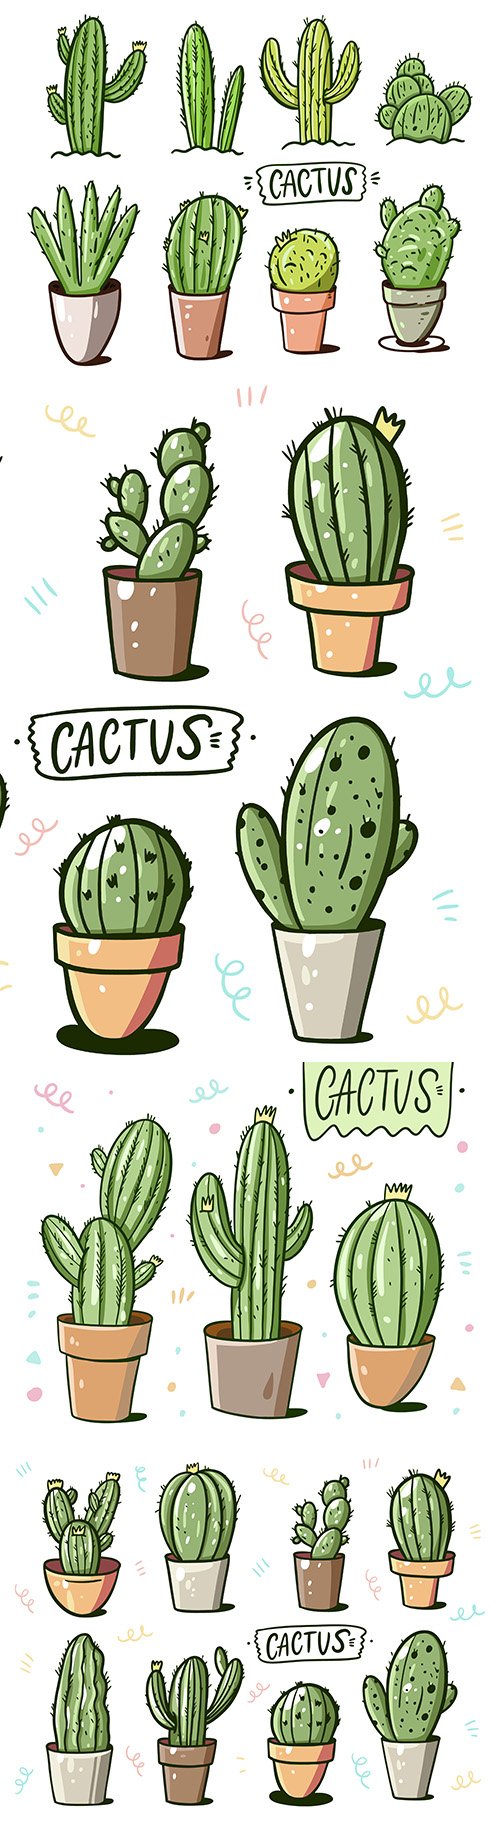 Cactus in homemade flower pots design cartoon style